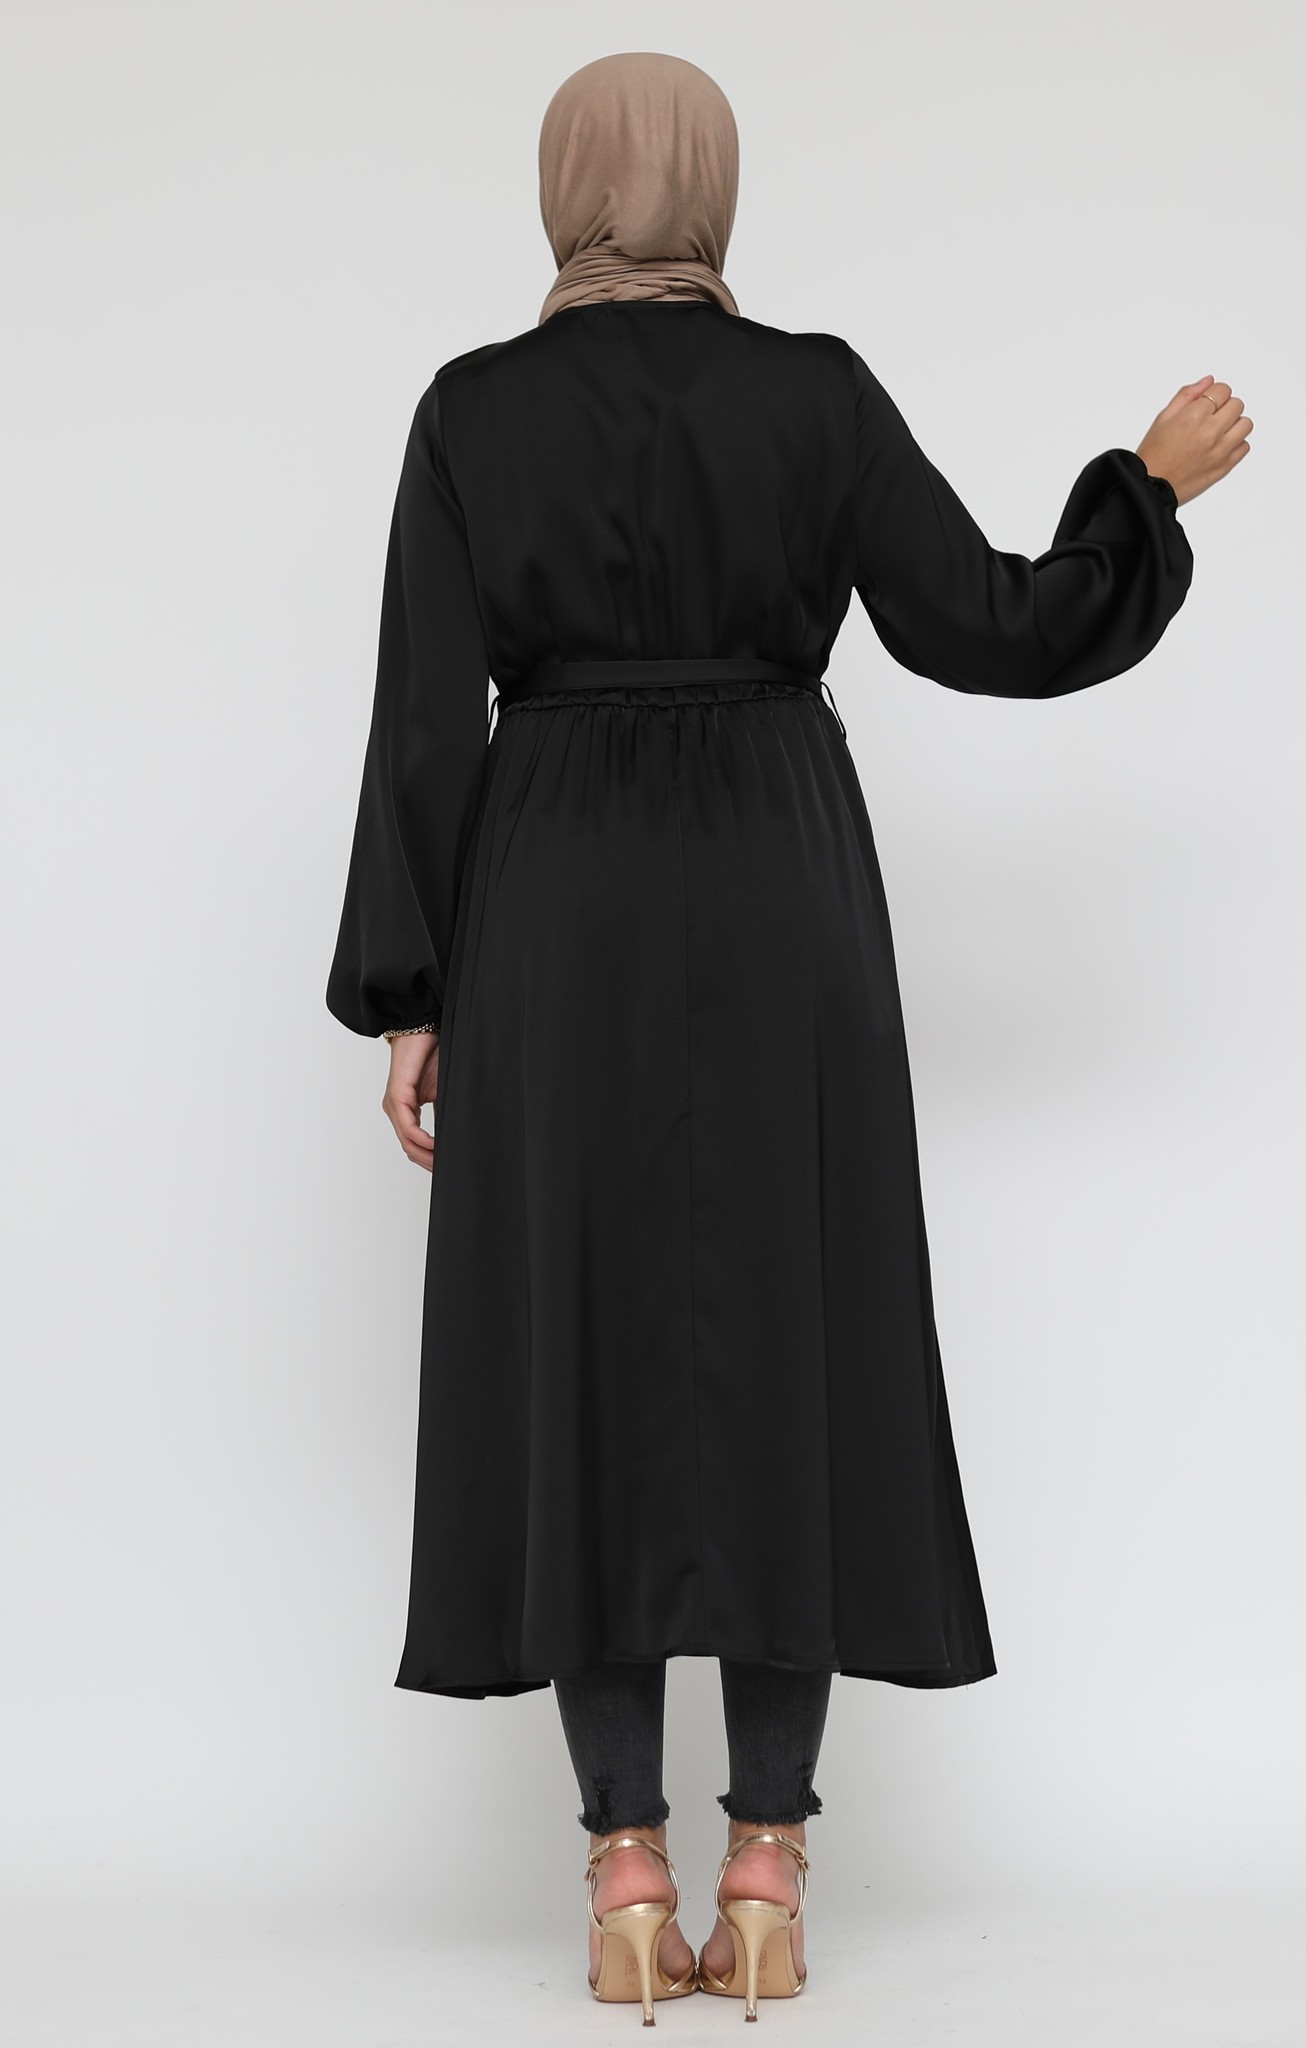 Satijnen jurk met knoopjes - zwart - By Aicha